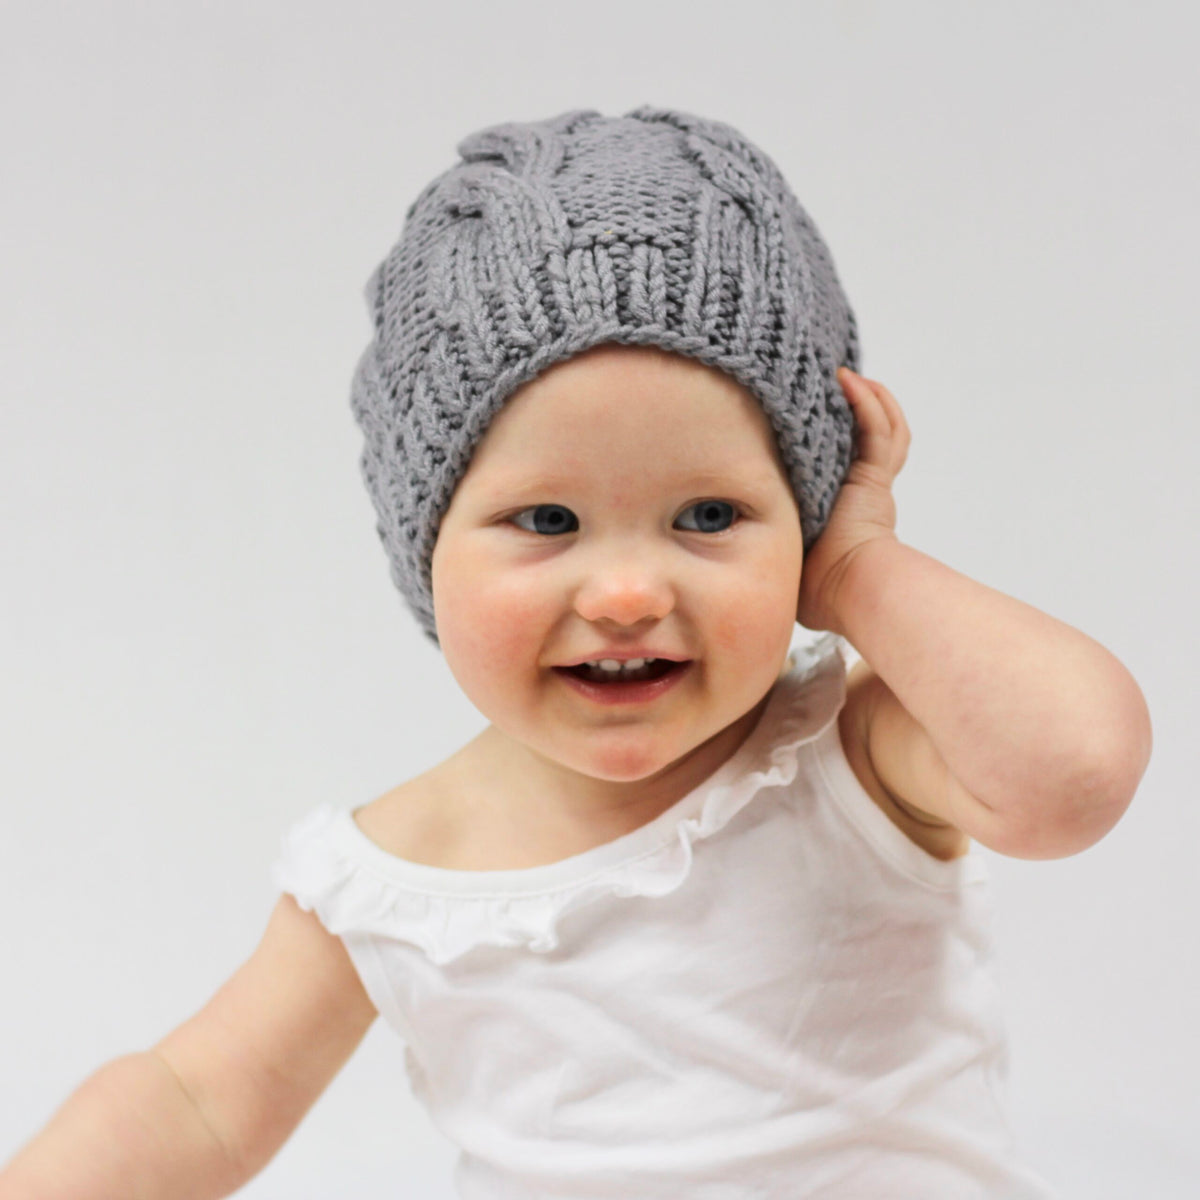 Tinker Tot Baby - Handmade Crochet Beanie – Classic Grey-Twist Gumnut